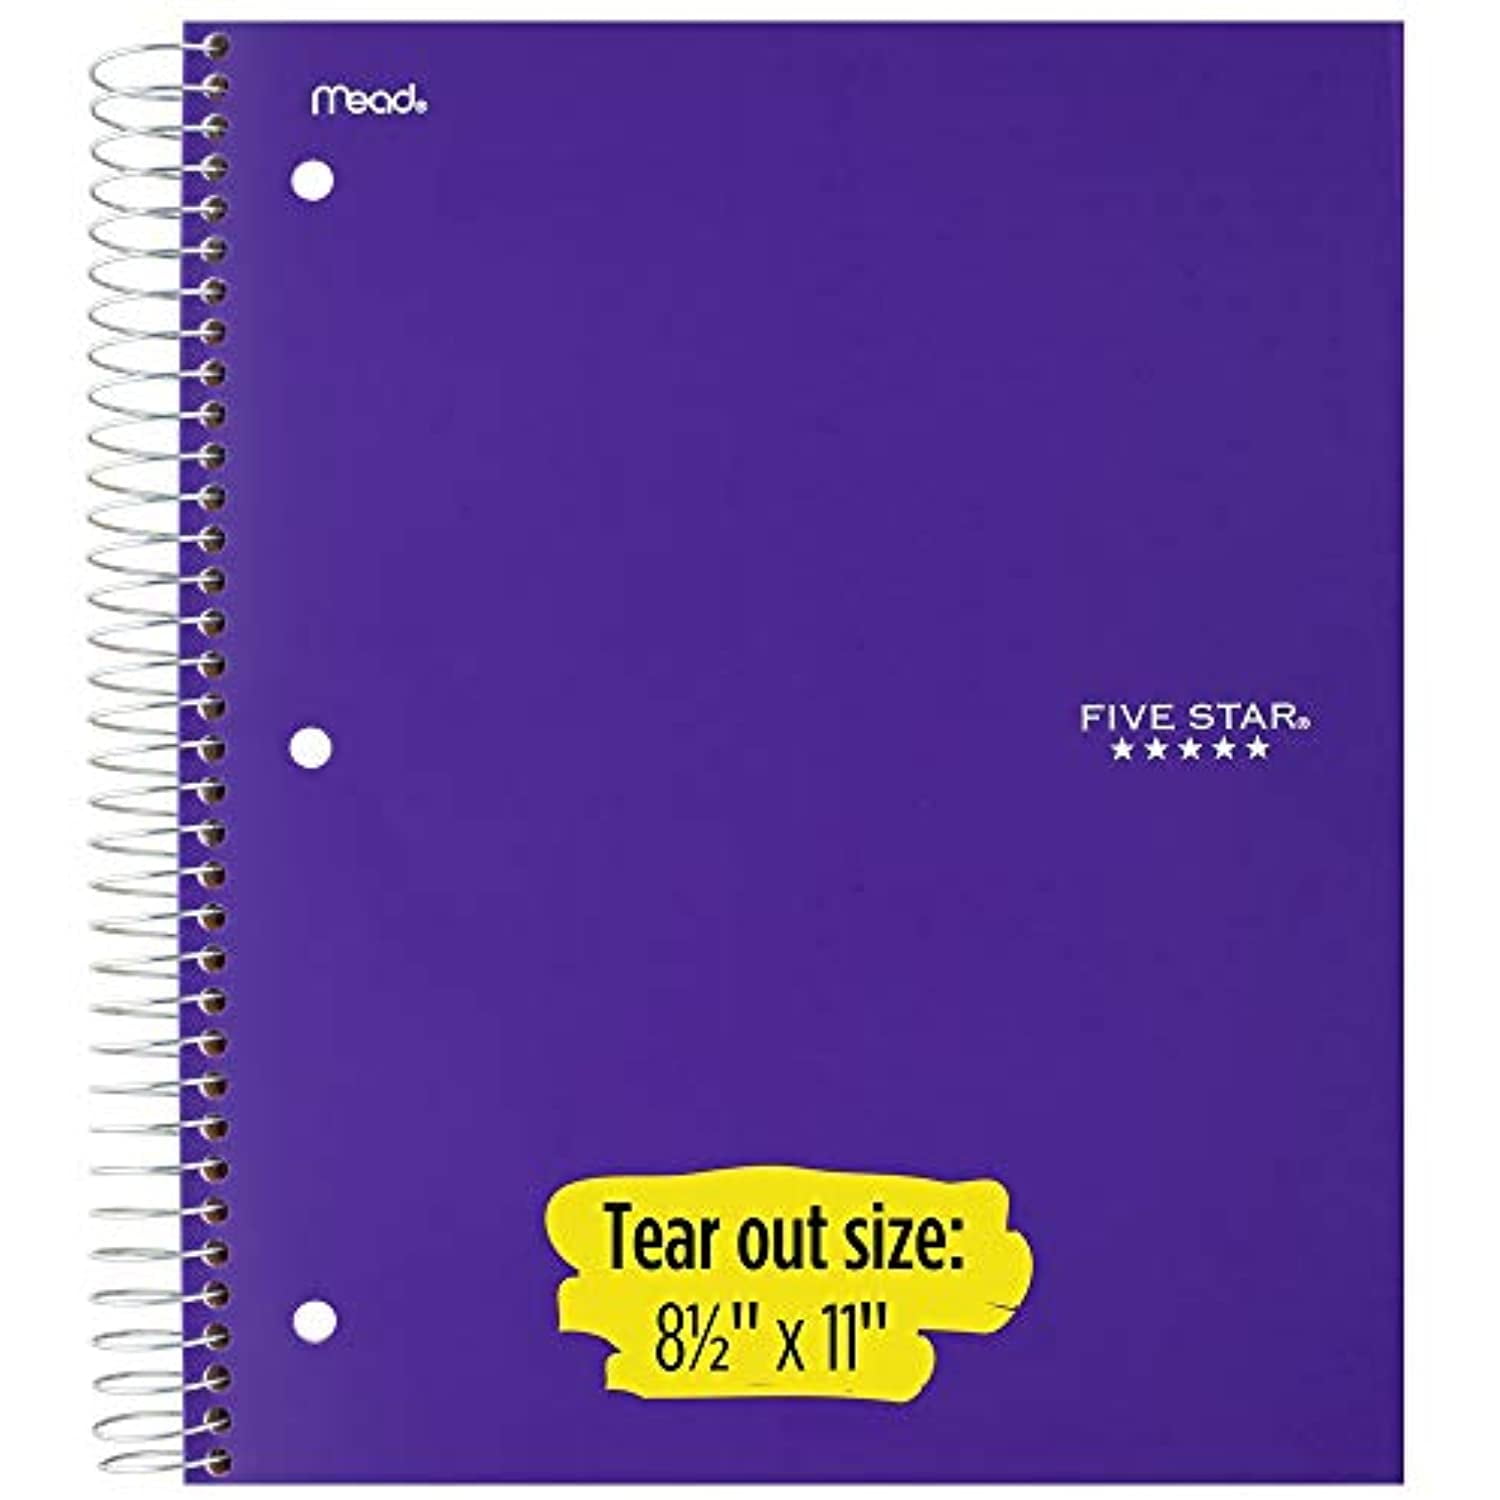 Office Supplies: 200-Page Five Star Advance Spiral Notebook $8, 2